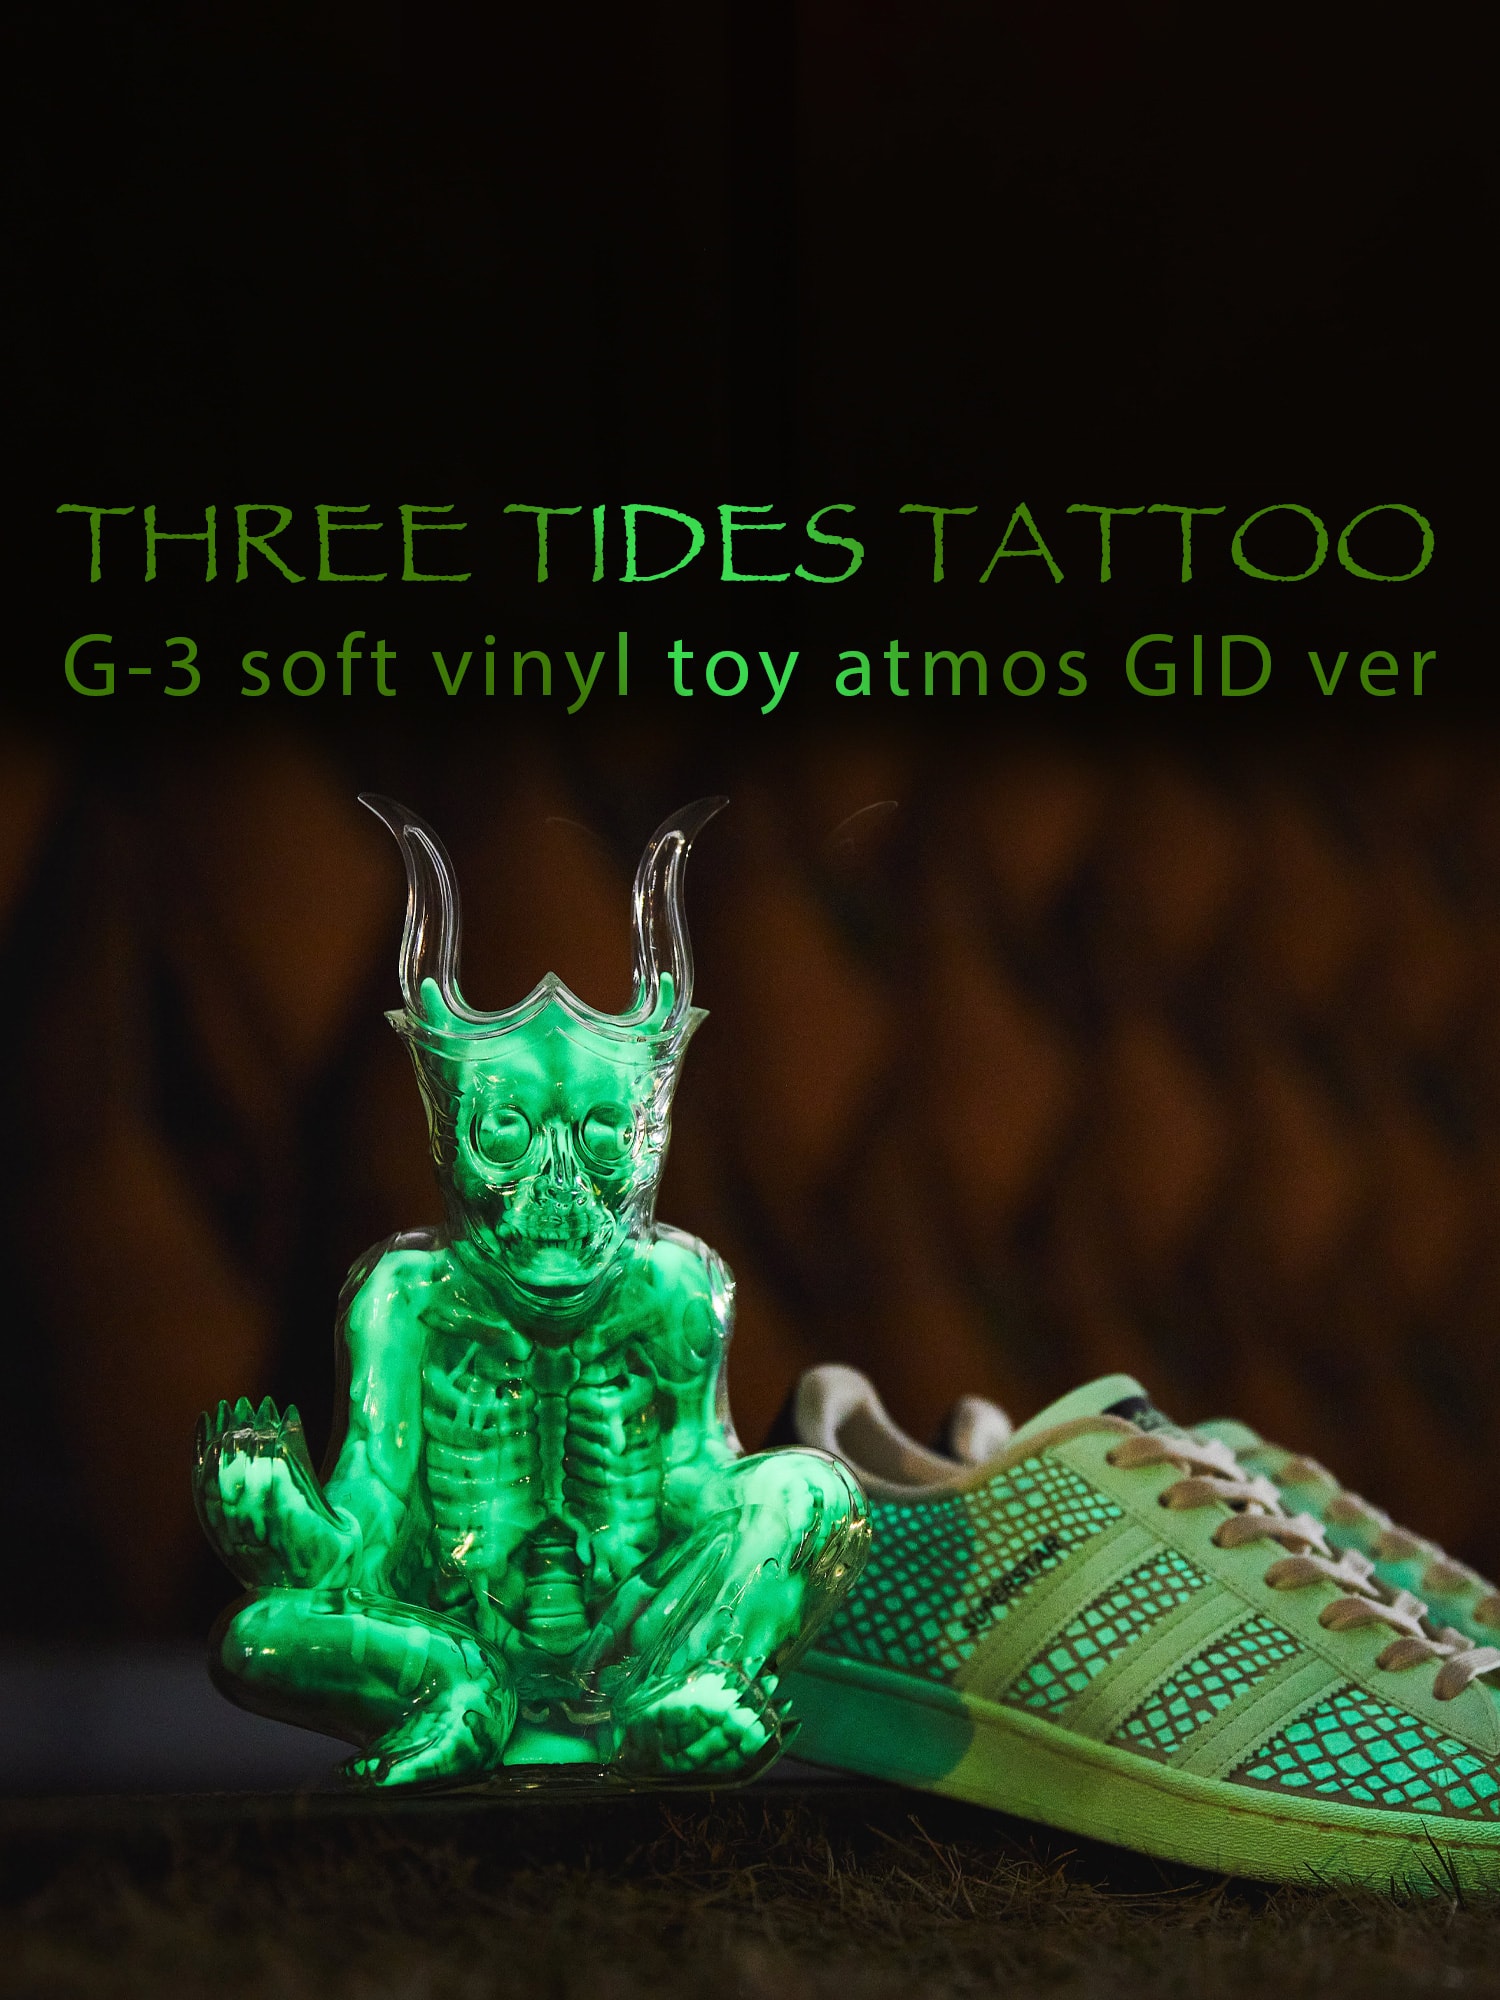 THREE TIDES TATTOO G-3 soft vinyl toy atmos GID ver